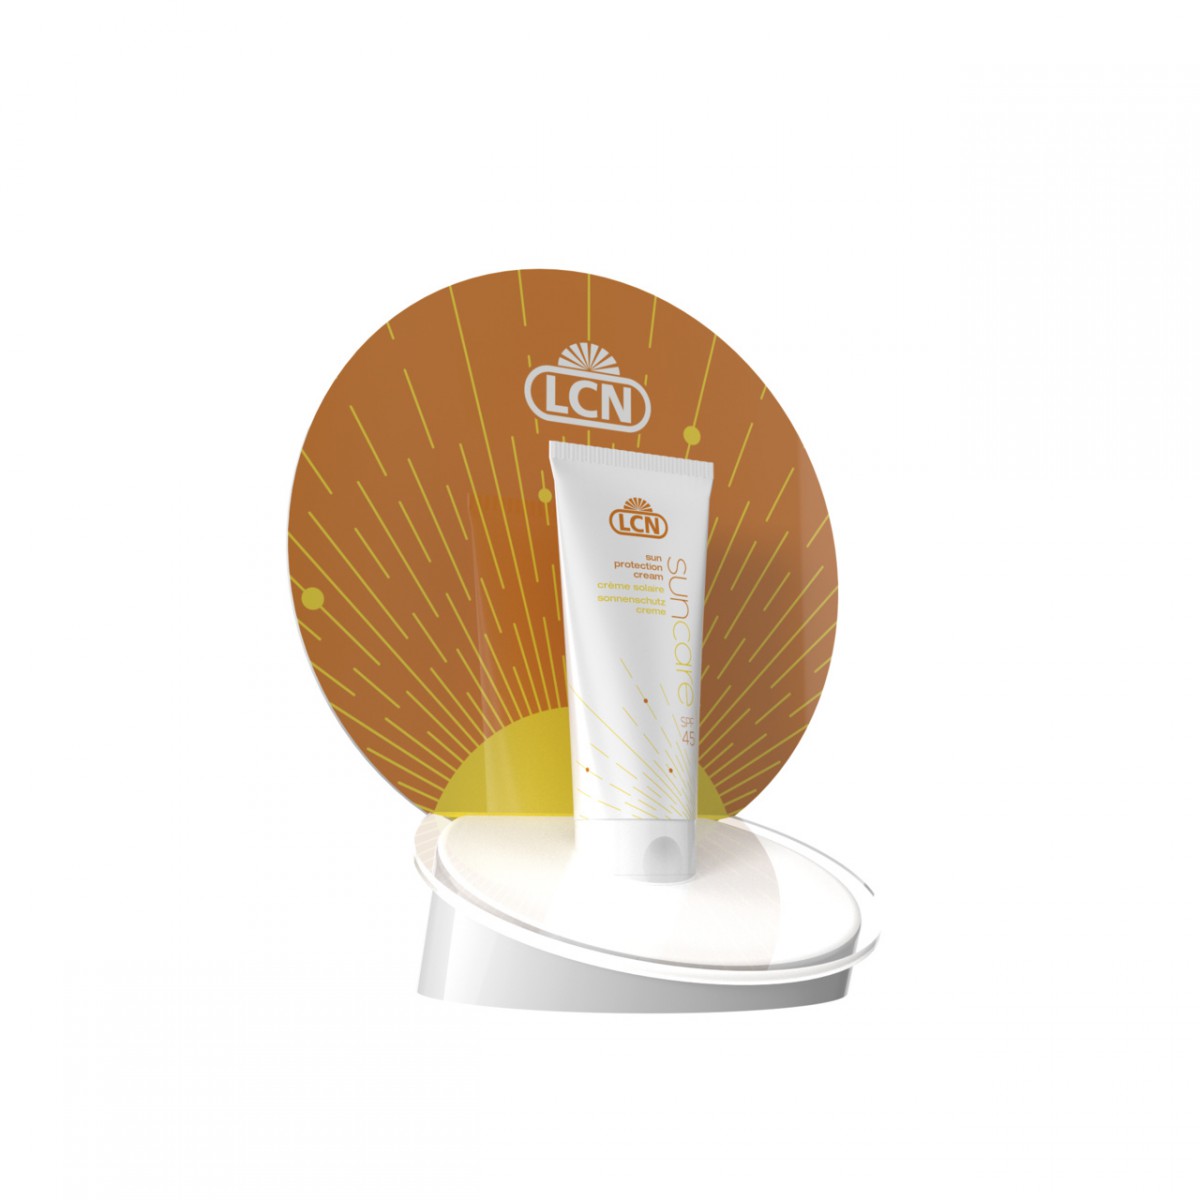 LCN Sun care cream SPF 45 - DISPLAY